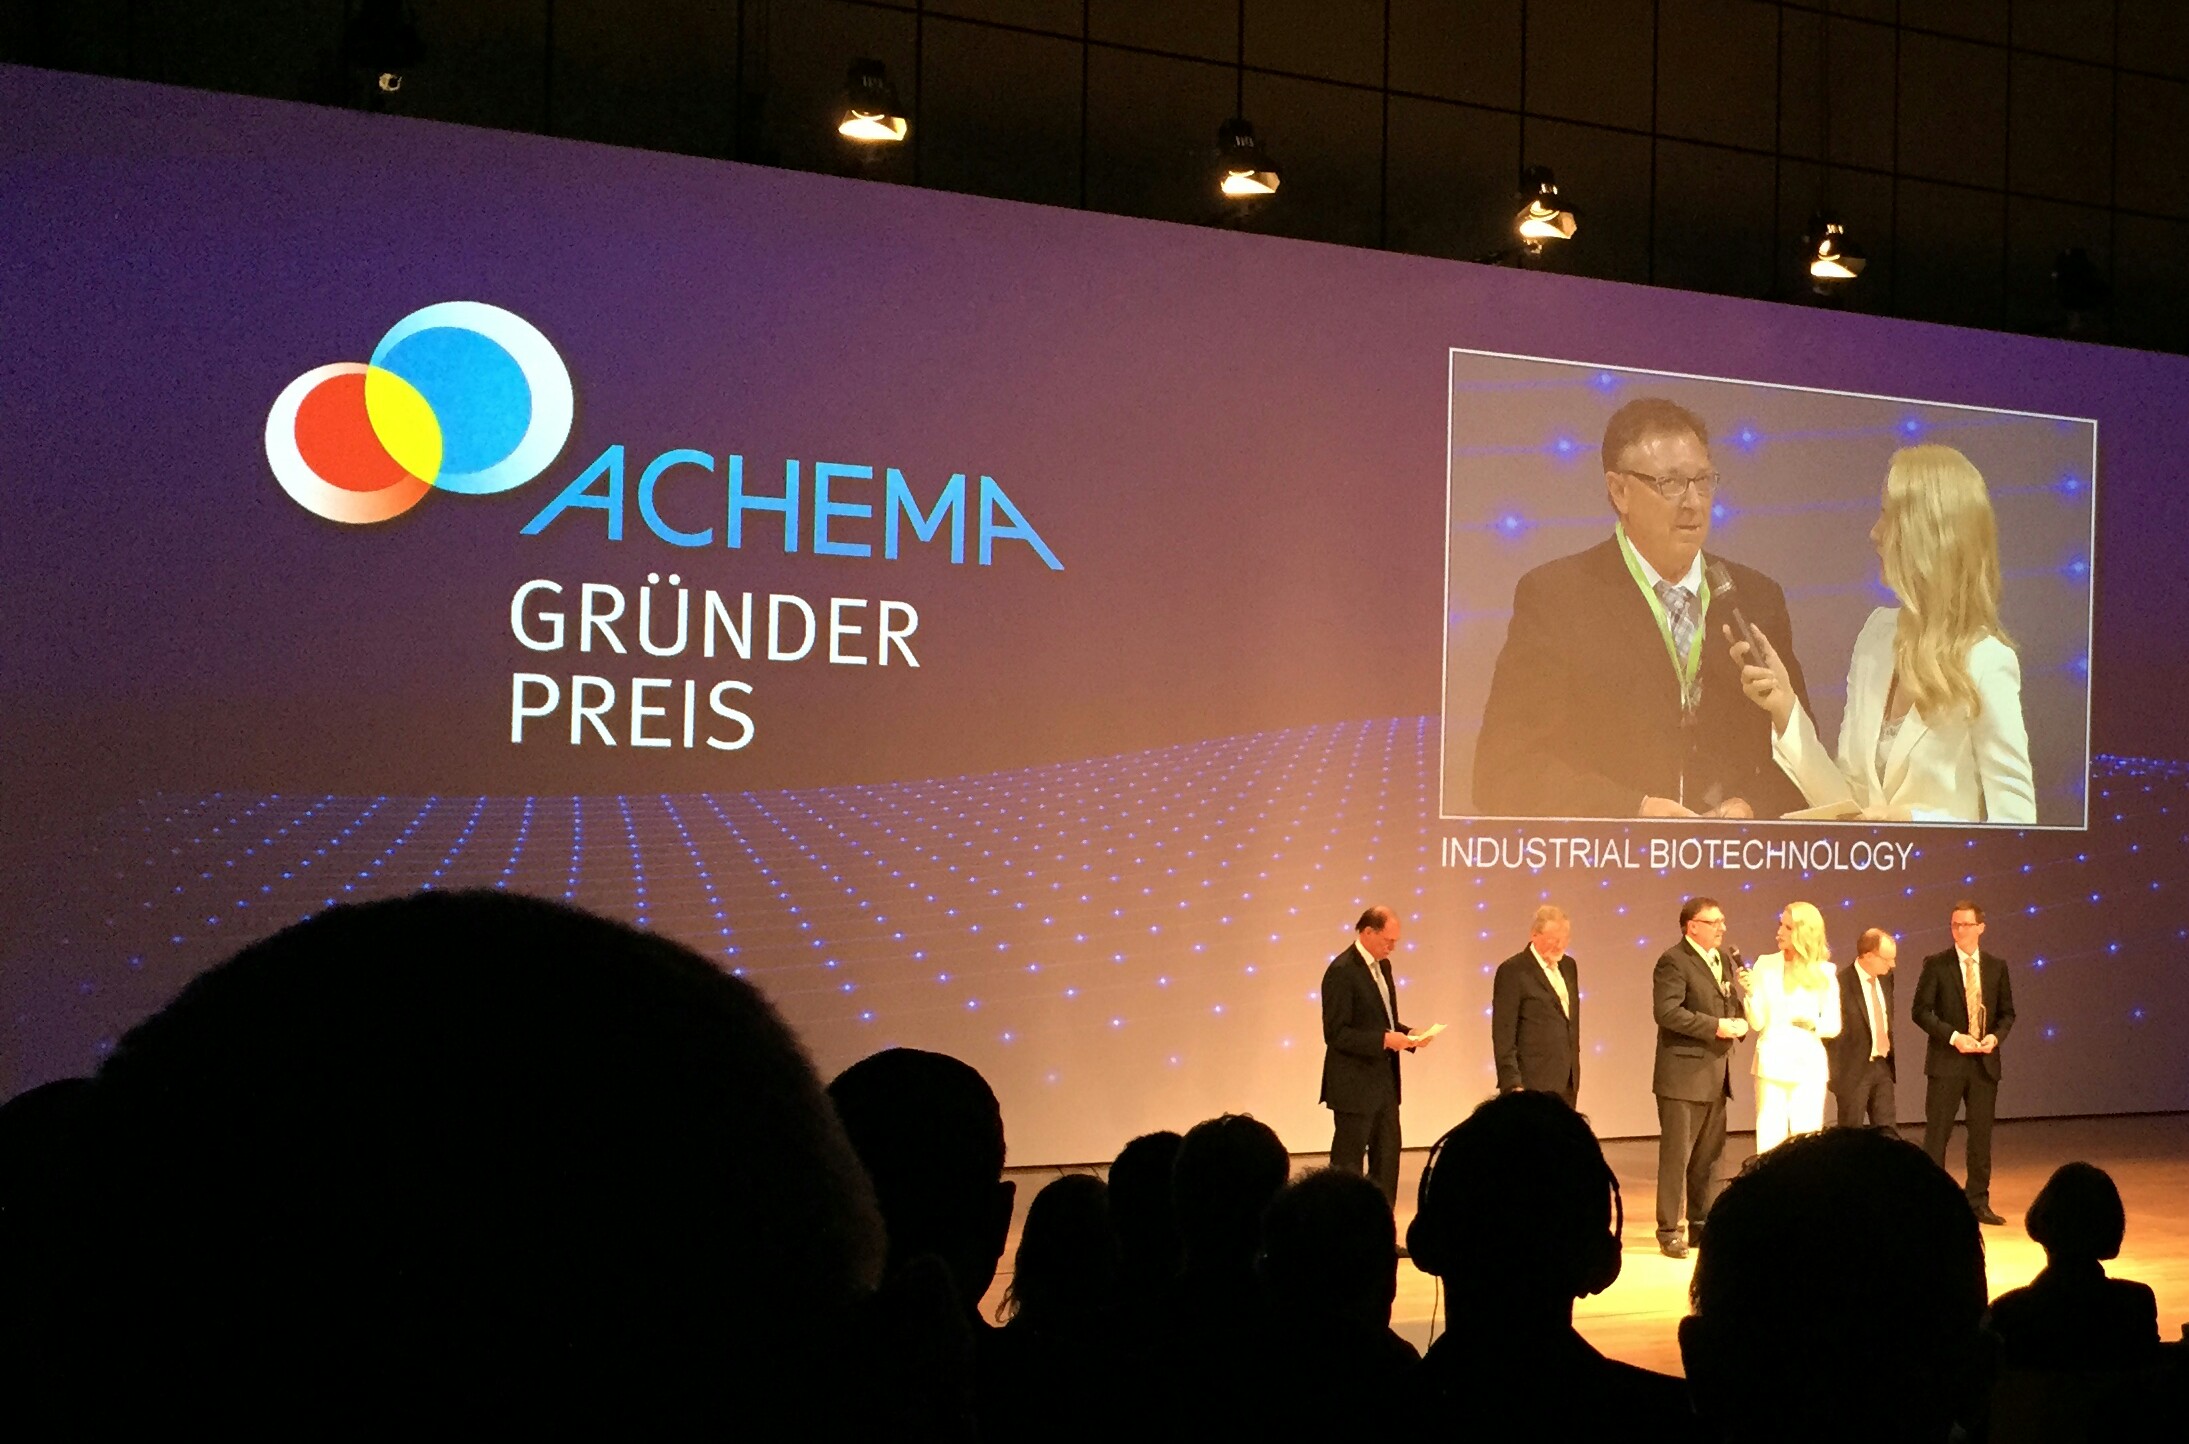 Achema-Gründerpreis 4Gene